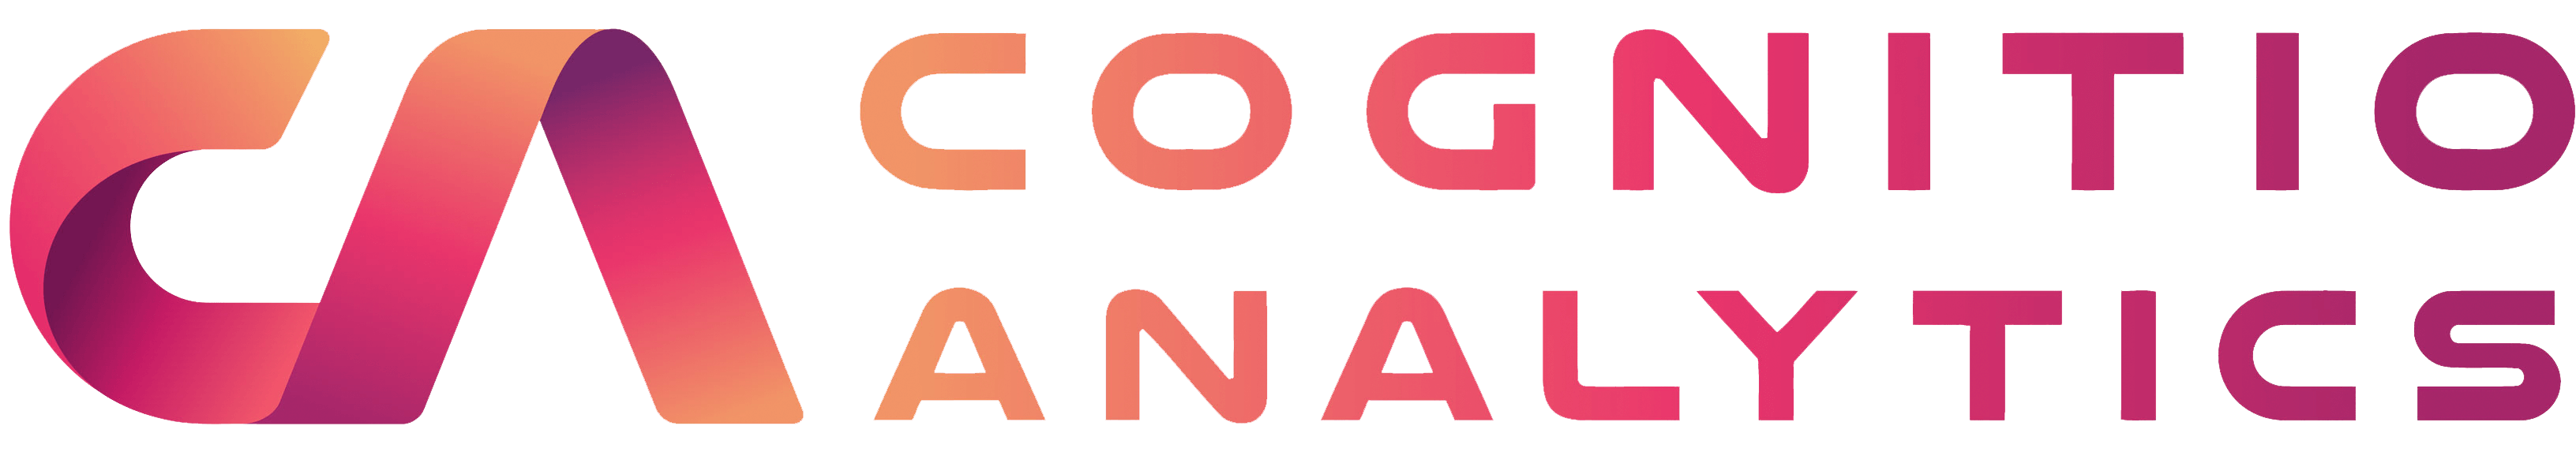 Cognito analytics logo